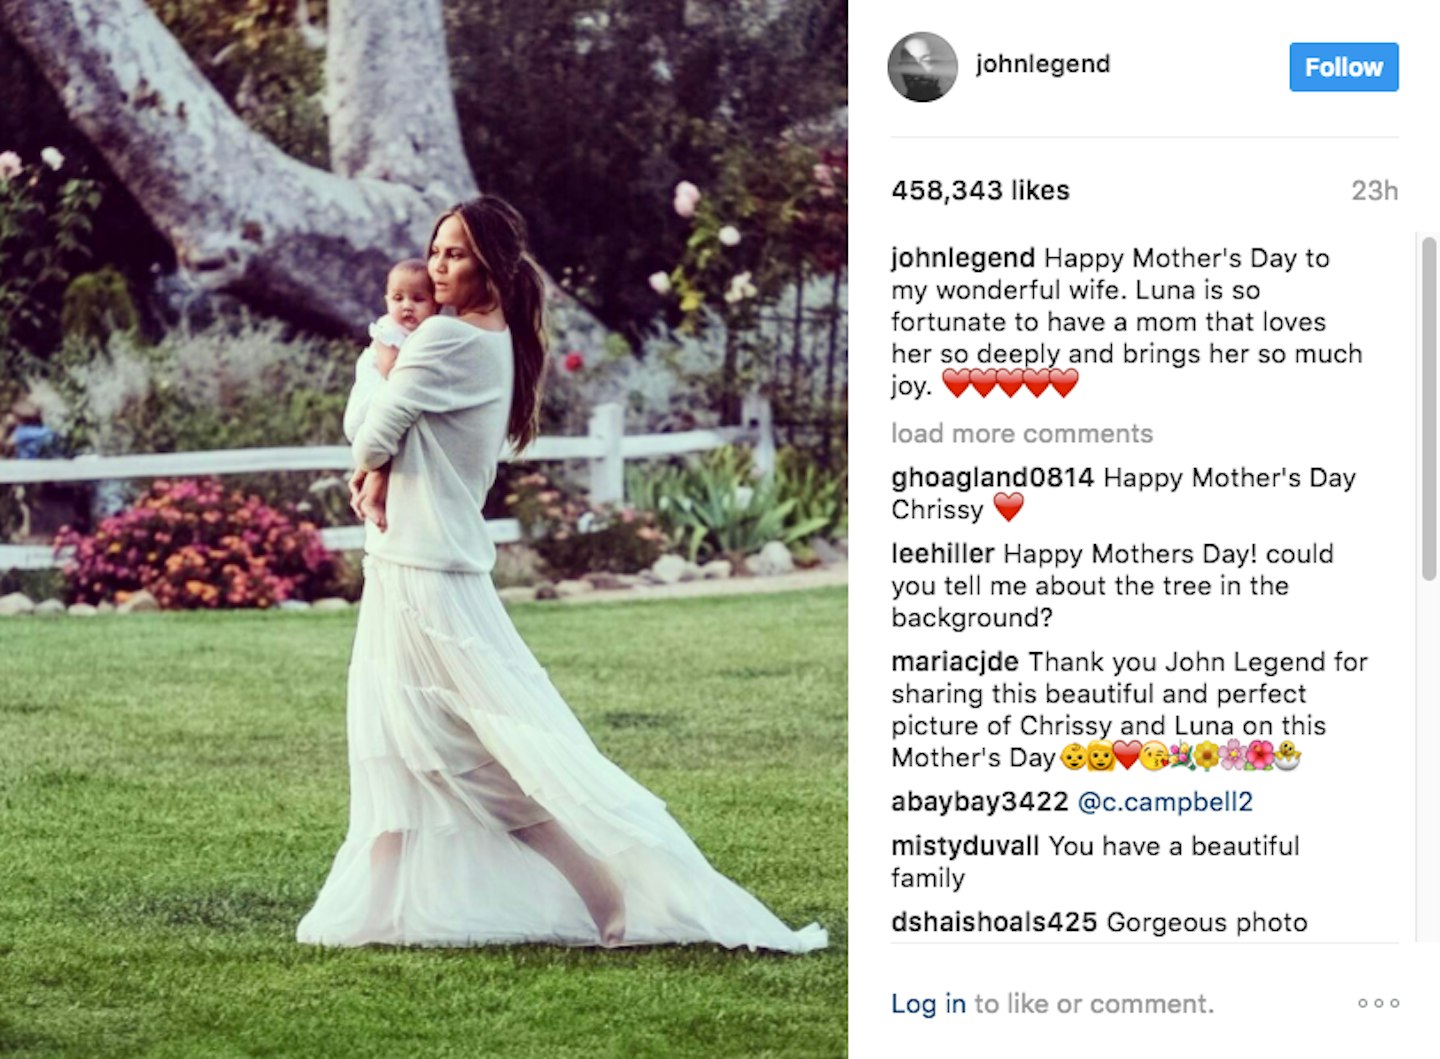 John Legend's Mother's Day message to Chrissy Teigen on Instagram